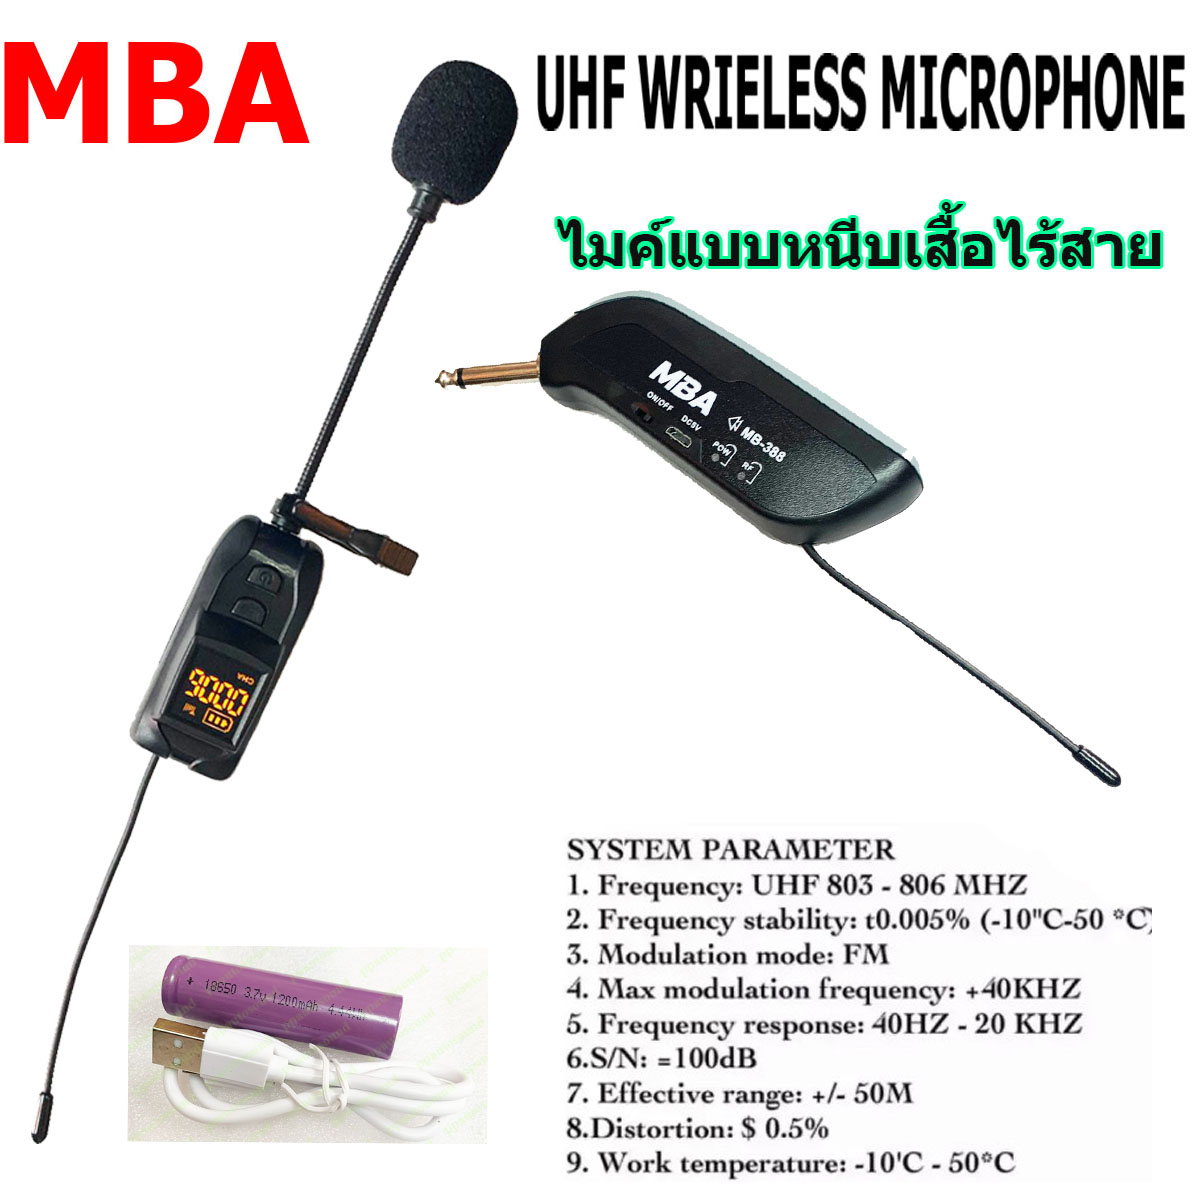 MBA/SOUNDMILAN ไมค์หนีเสื้อ รุ่น MB-388/M-605 UHF WIRELESS Microphone ไมค์โครโฟน ไมค์ไร้สาย  ppautosound